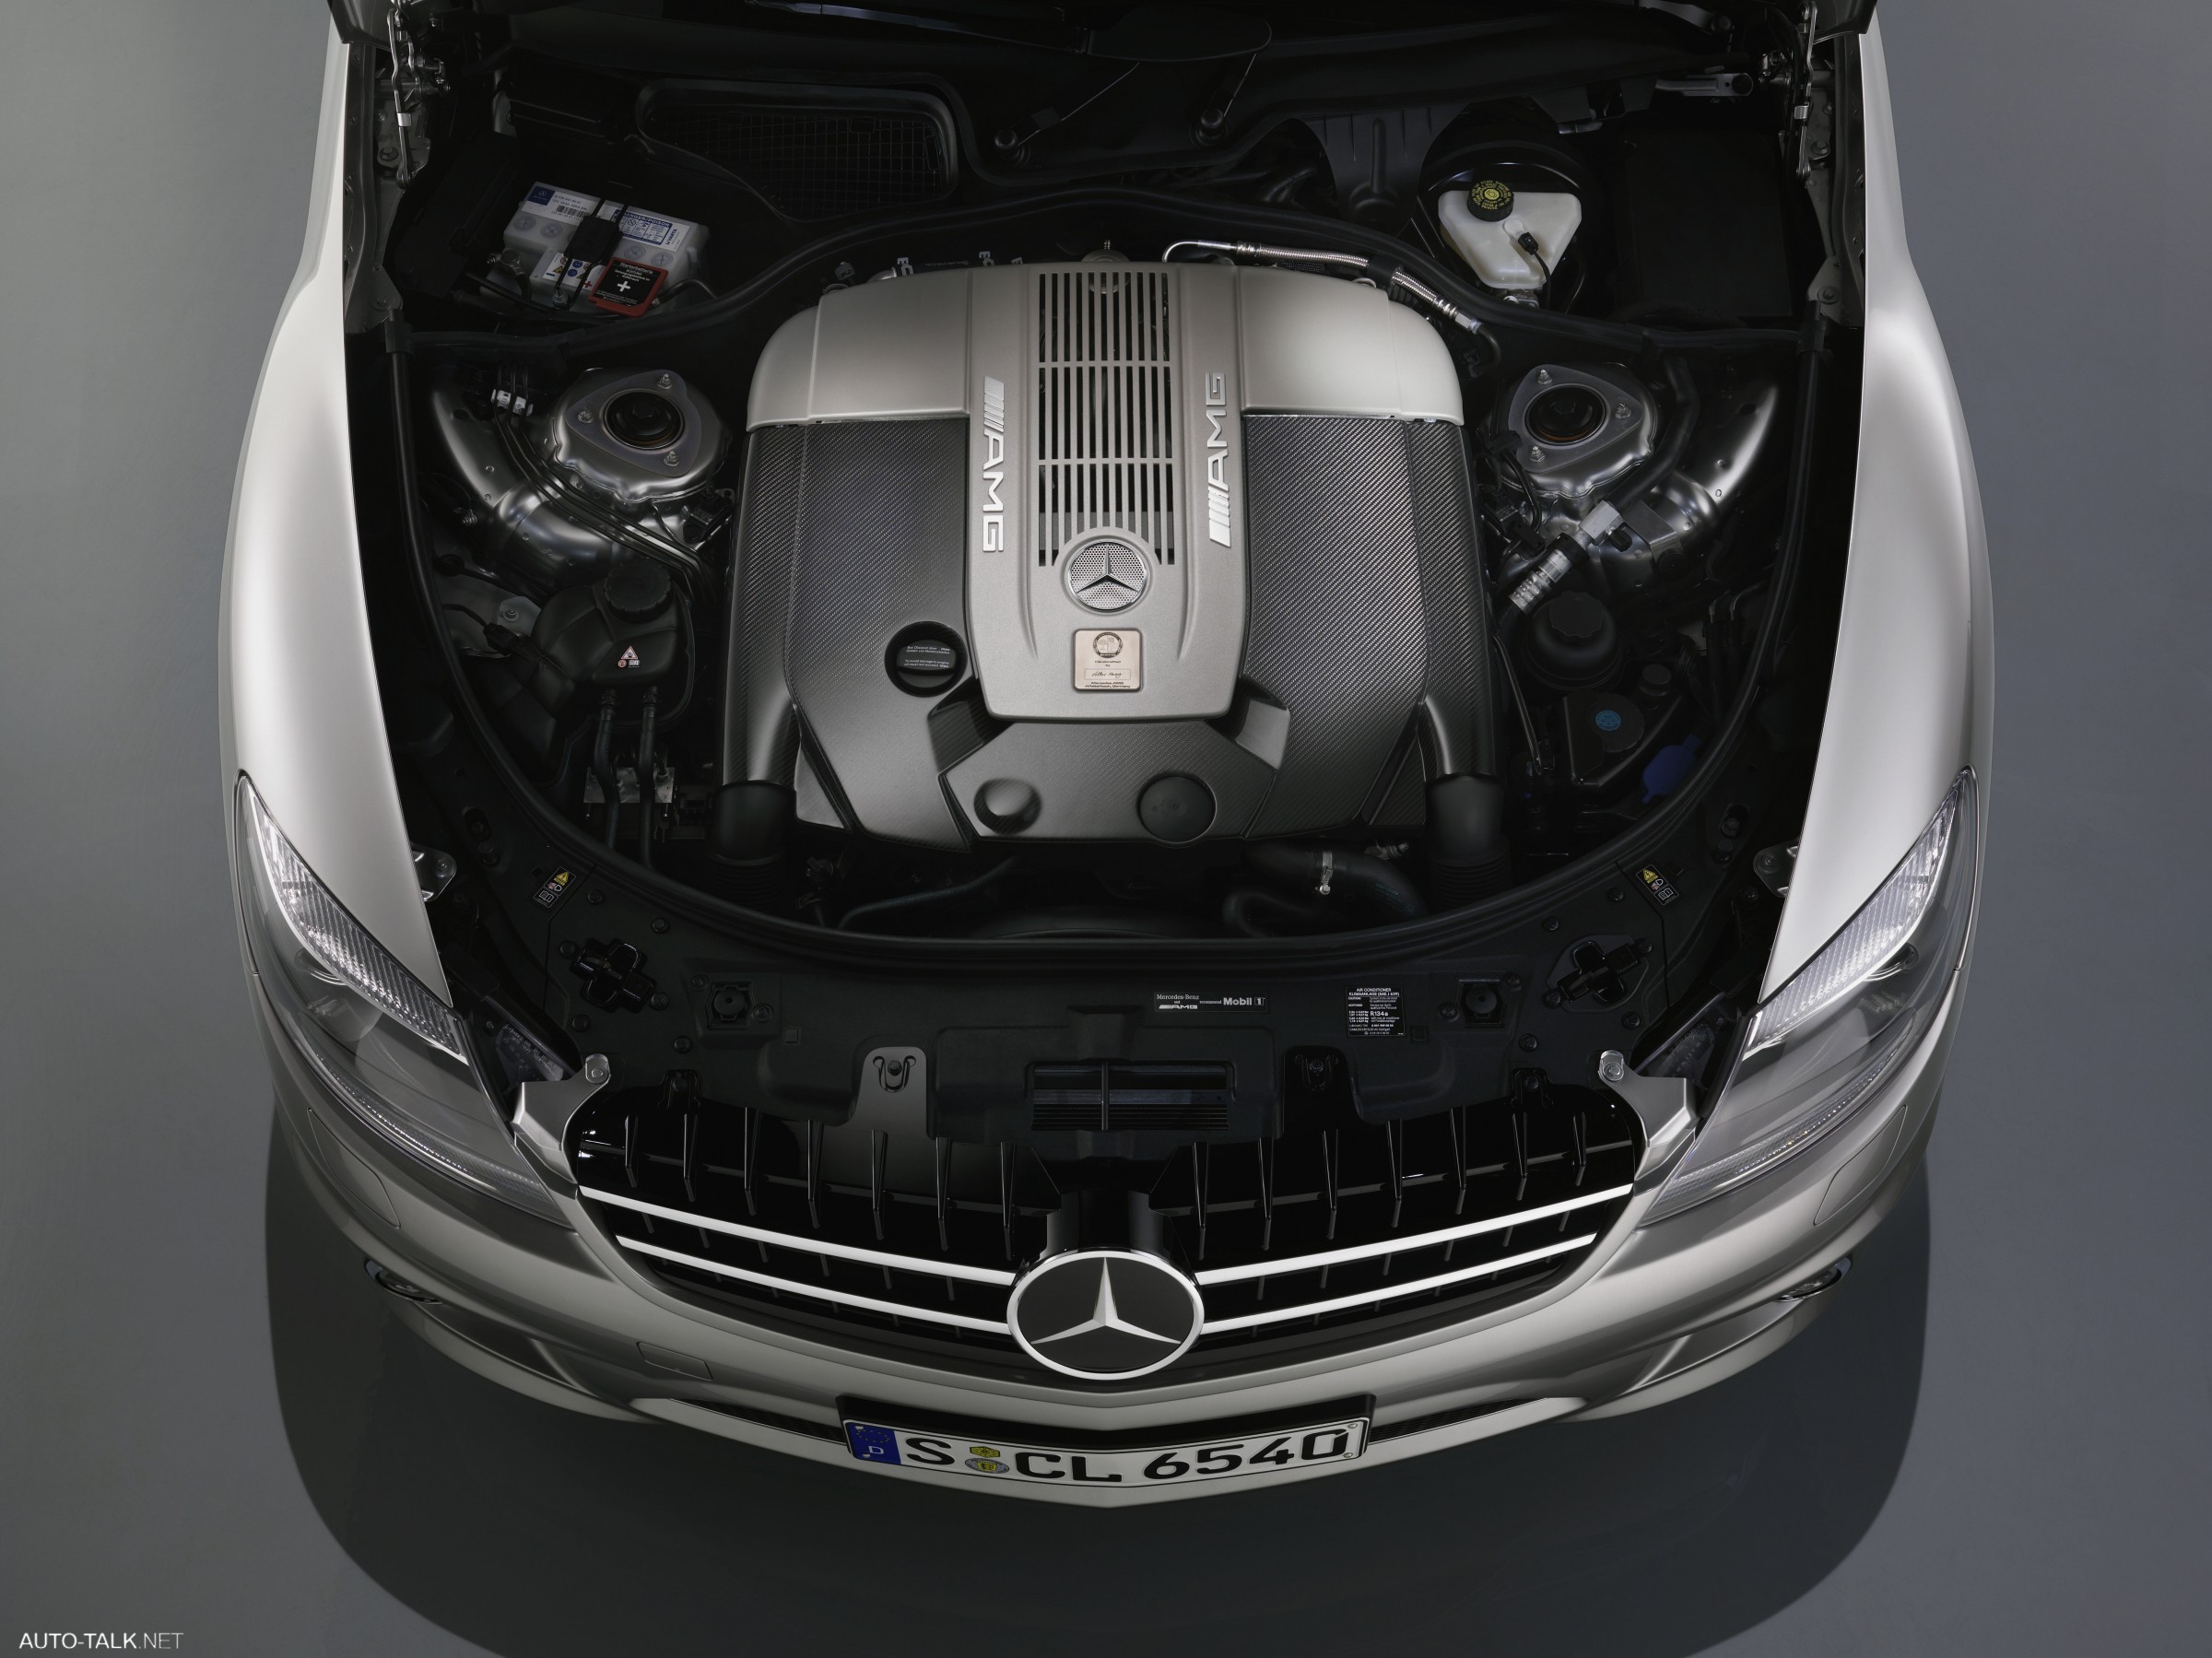 Mercedes-Benz CL65 AMG